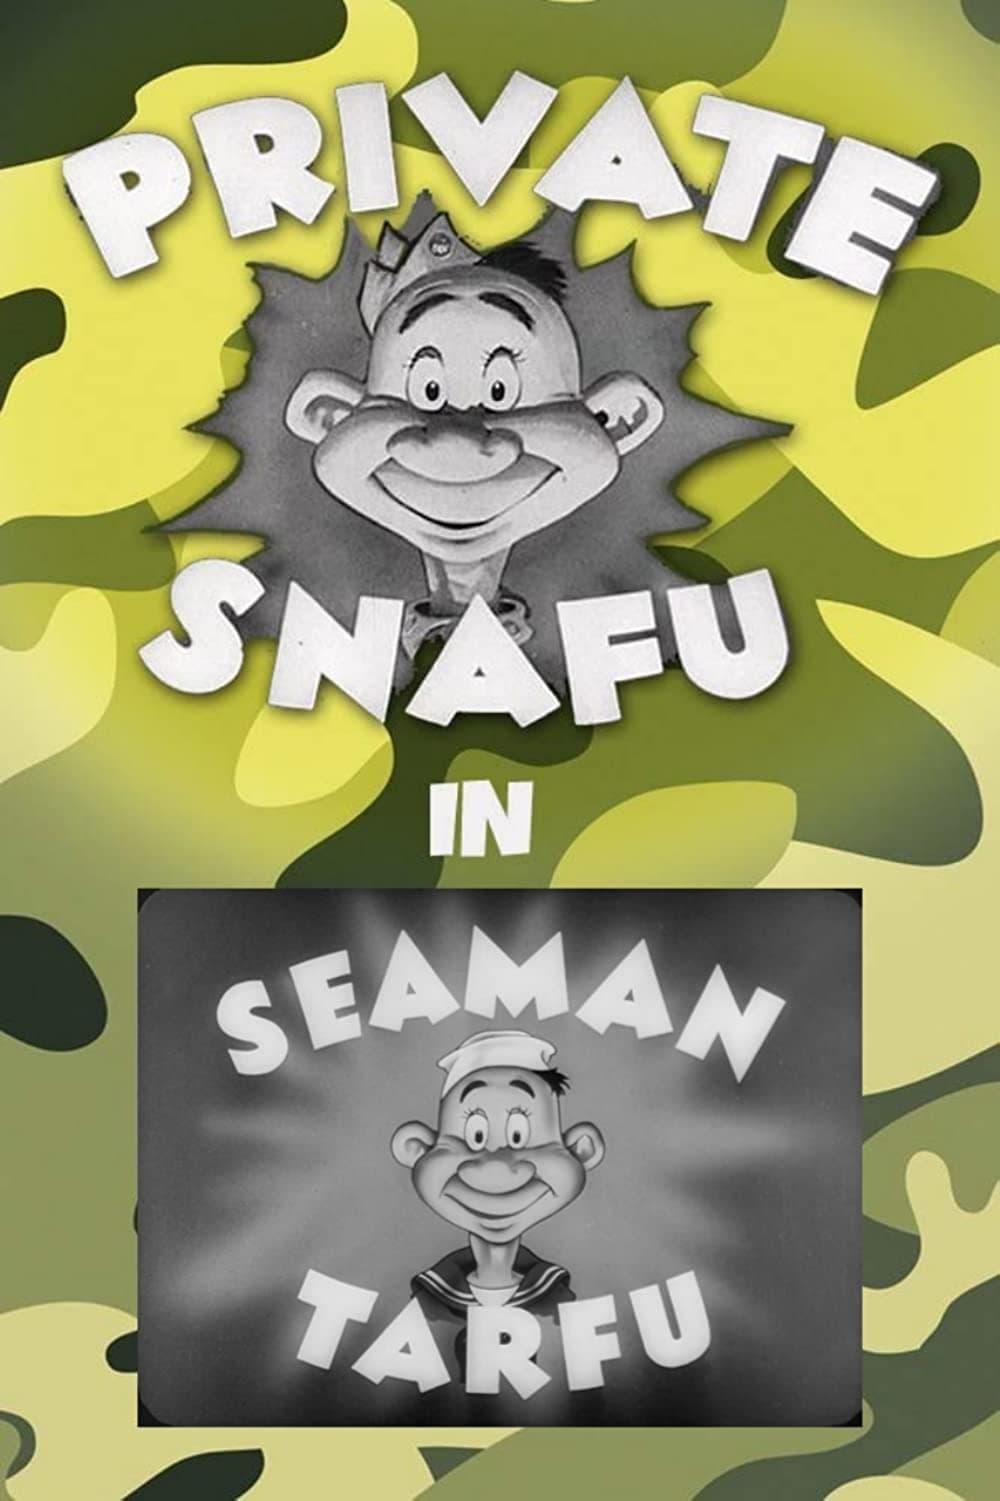 Private Snafu Presents Seaman Tarfu in the Navy poster